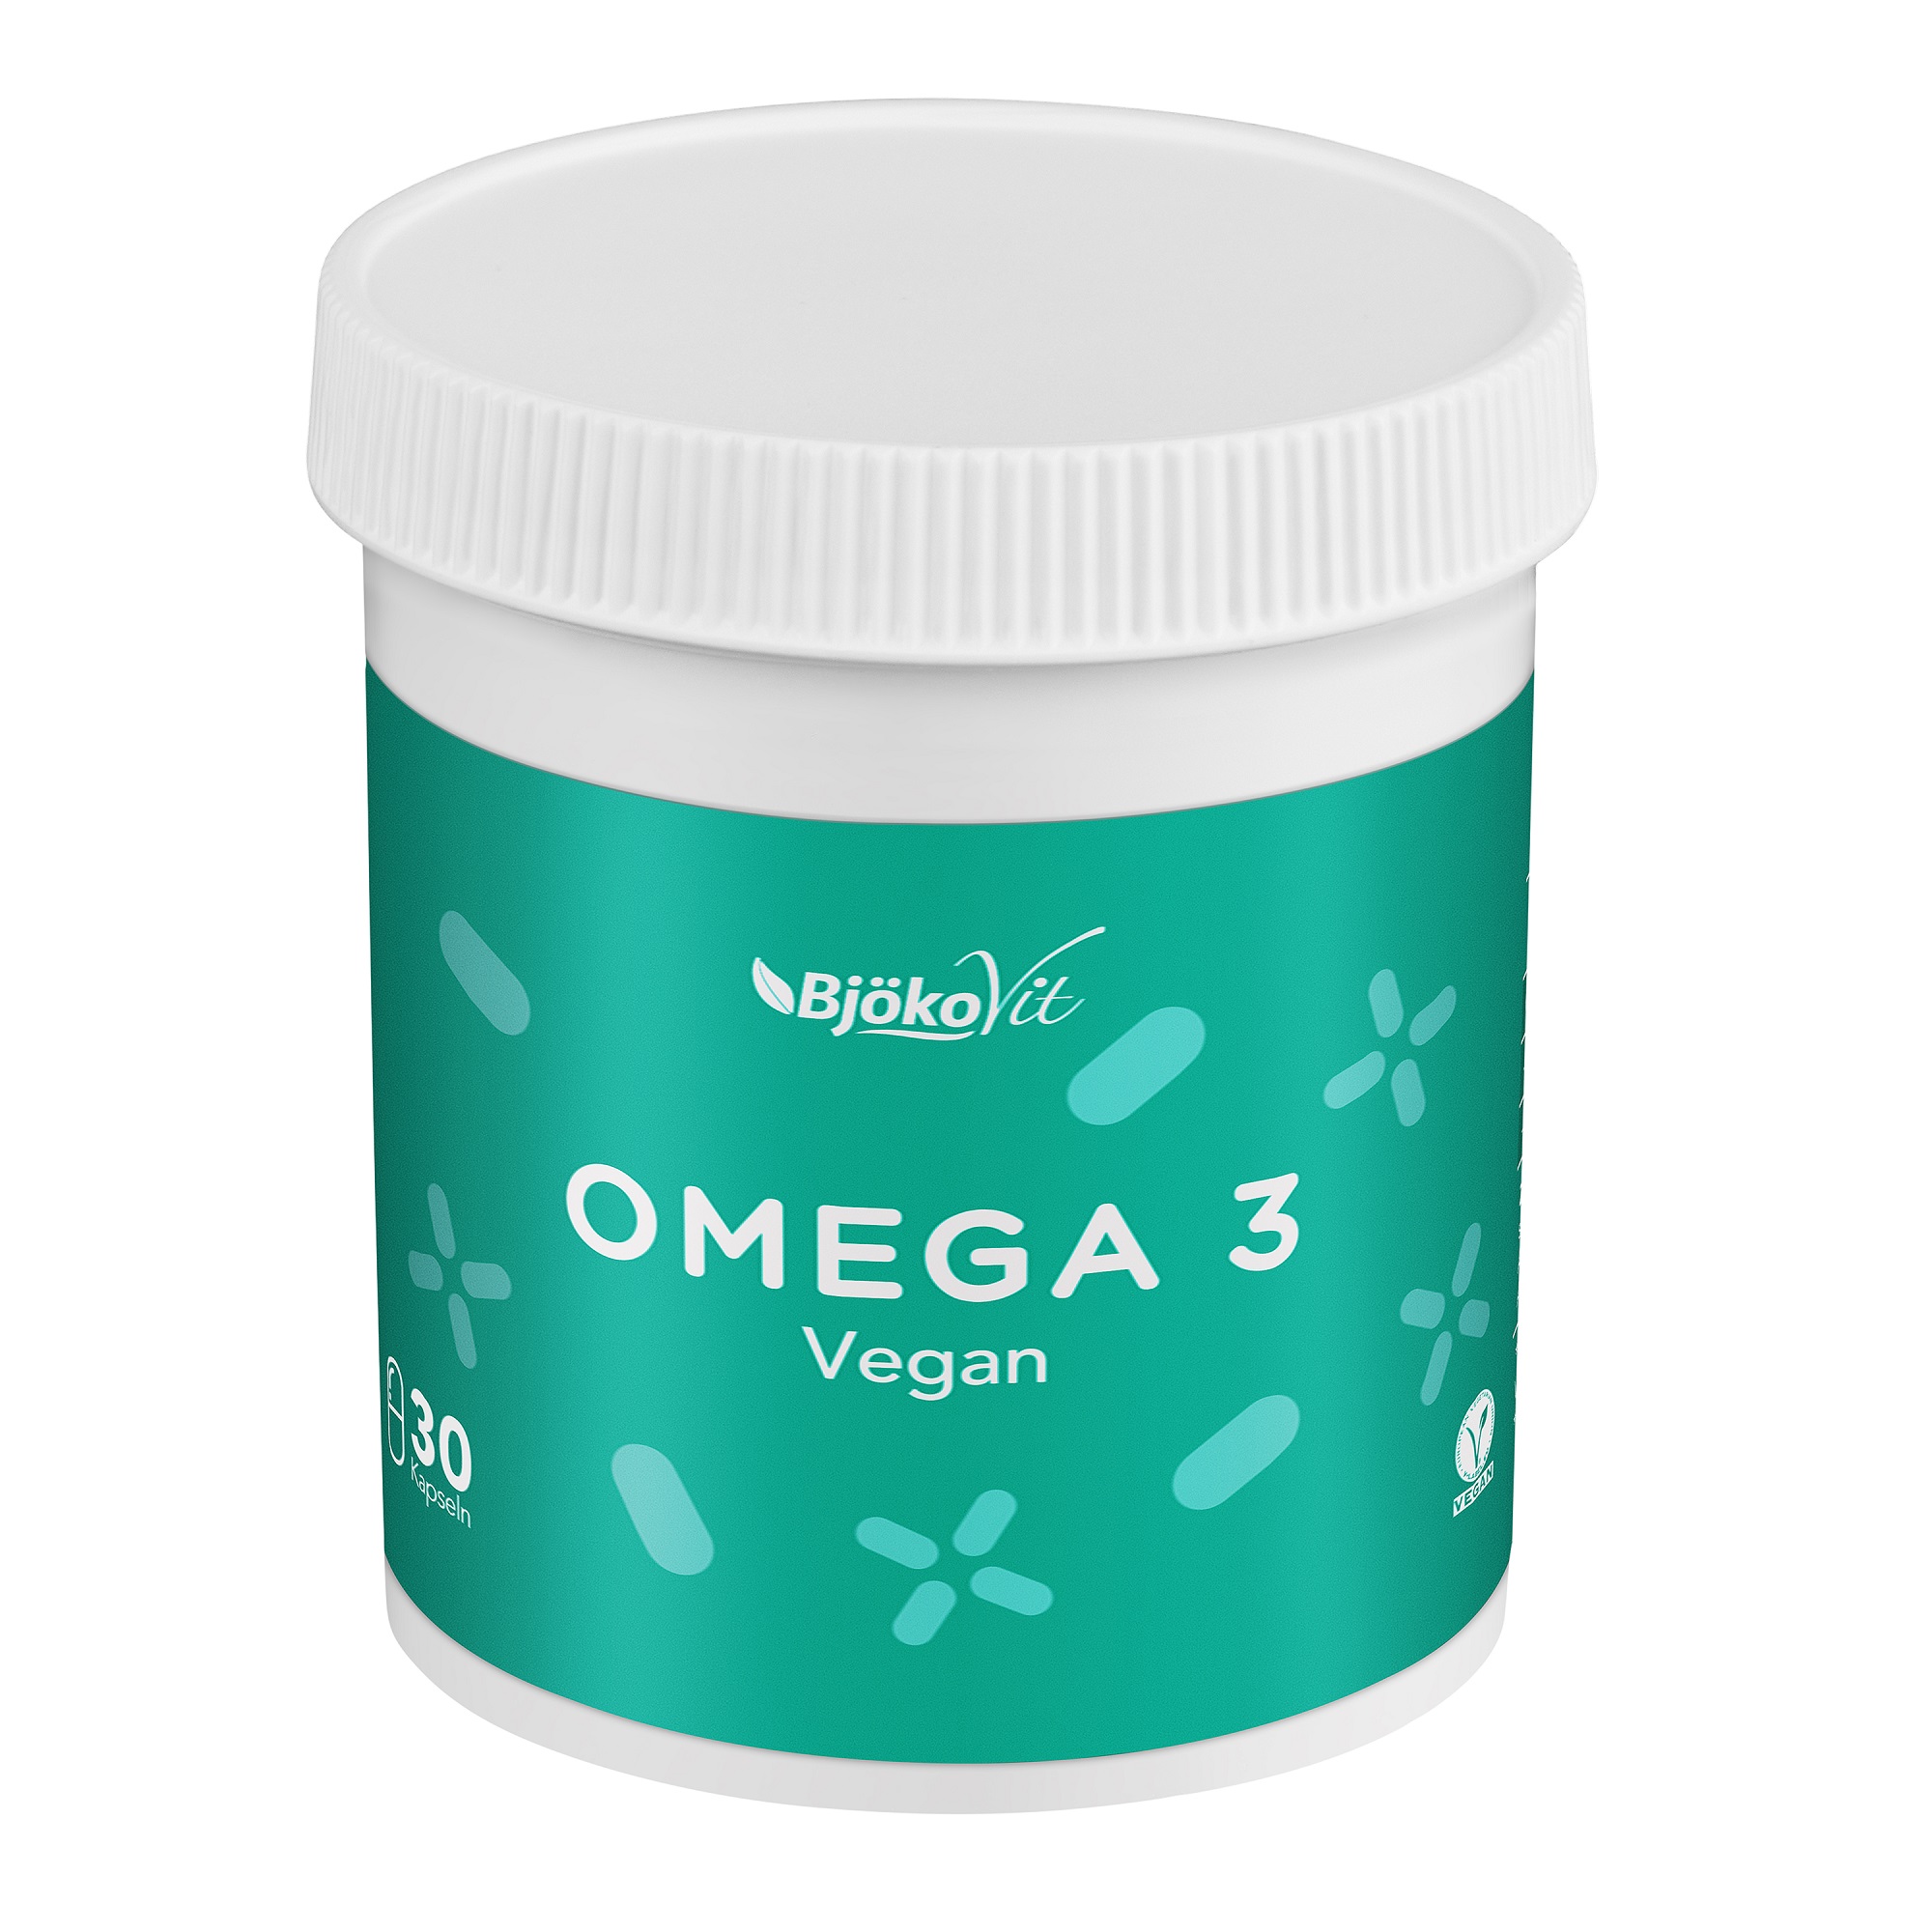 BjökoVit Omega 3 DHA+EPA Kapseln vegan